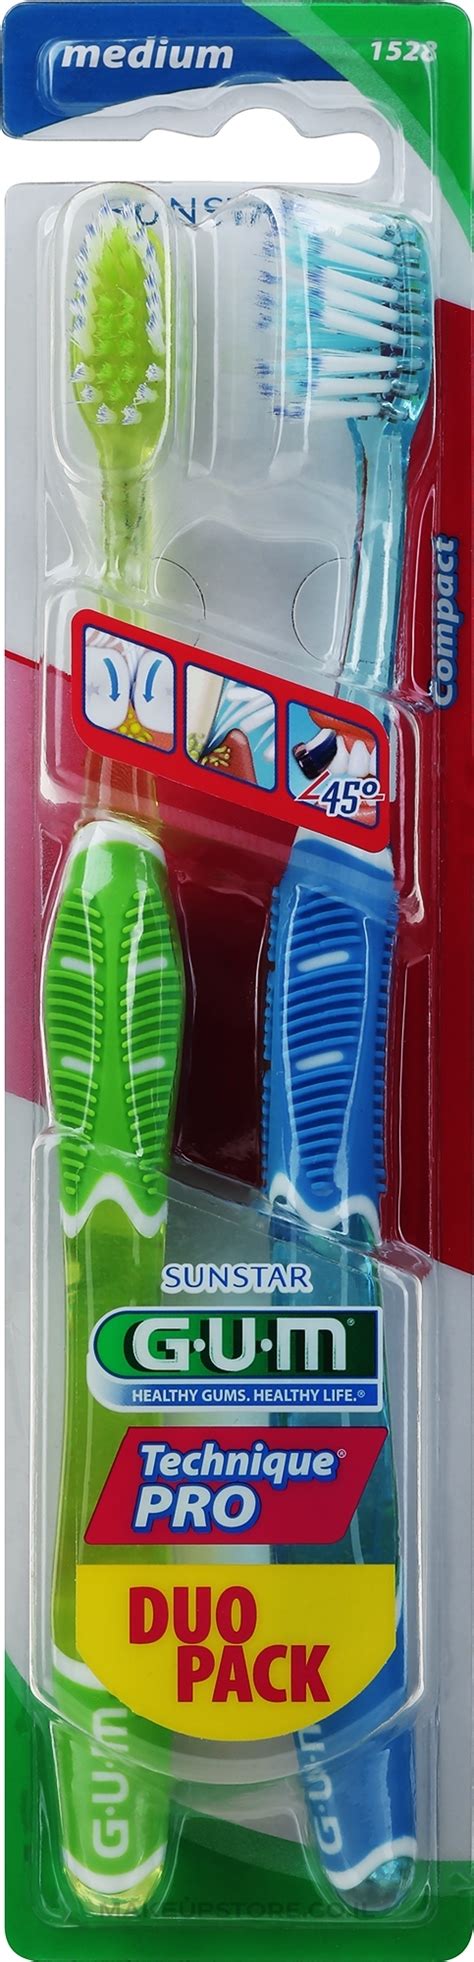 G.U.M Duo Pack Medium Toothbrush - Technique Pro Toothbrush, medium, green + blue | Makeupstore ...